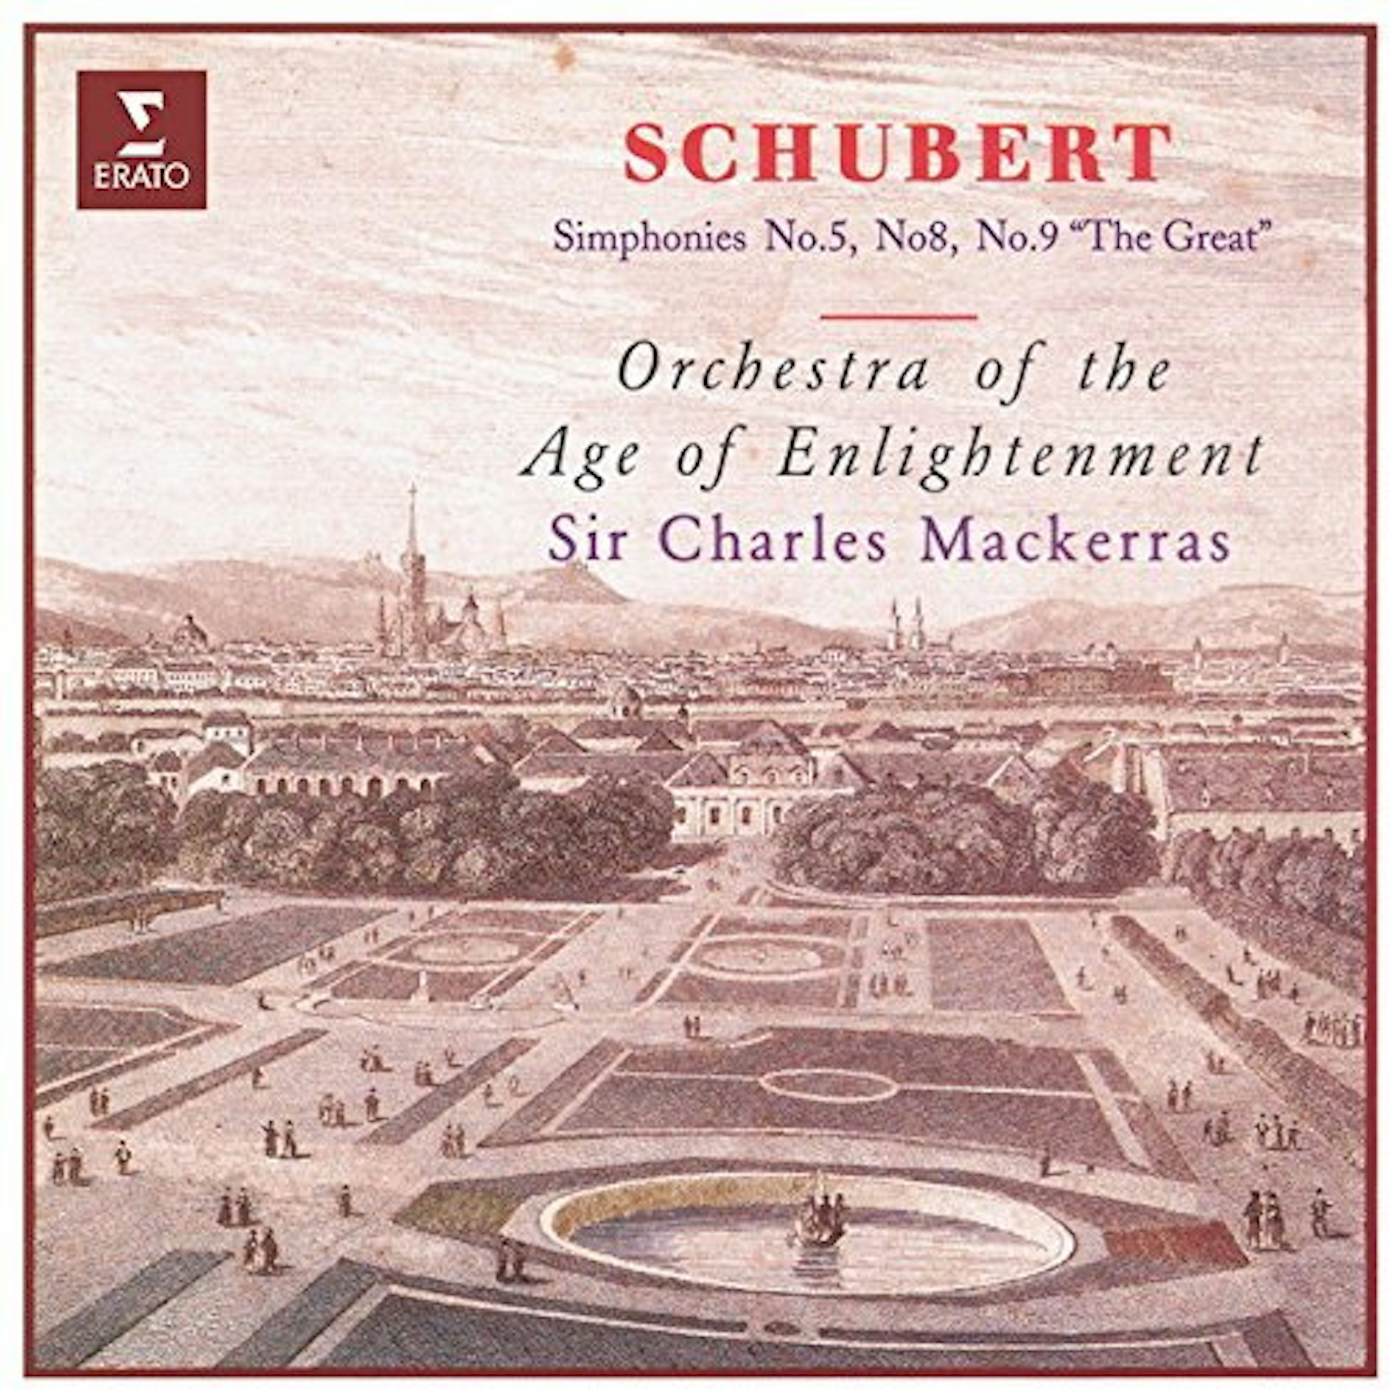 Charles Mackerras SCHUBERT: SYMPHONY 9: THE GREAT CD